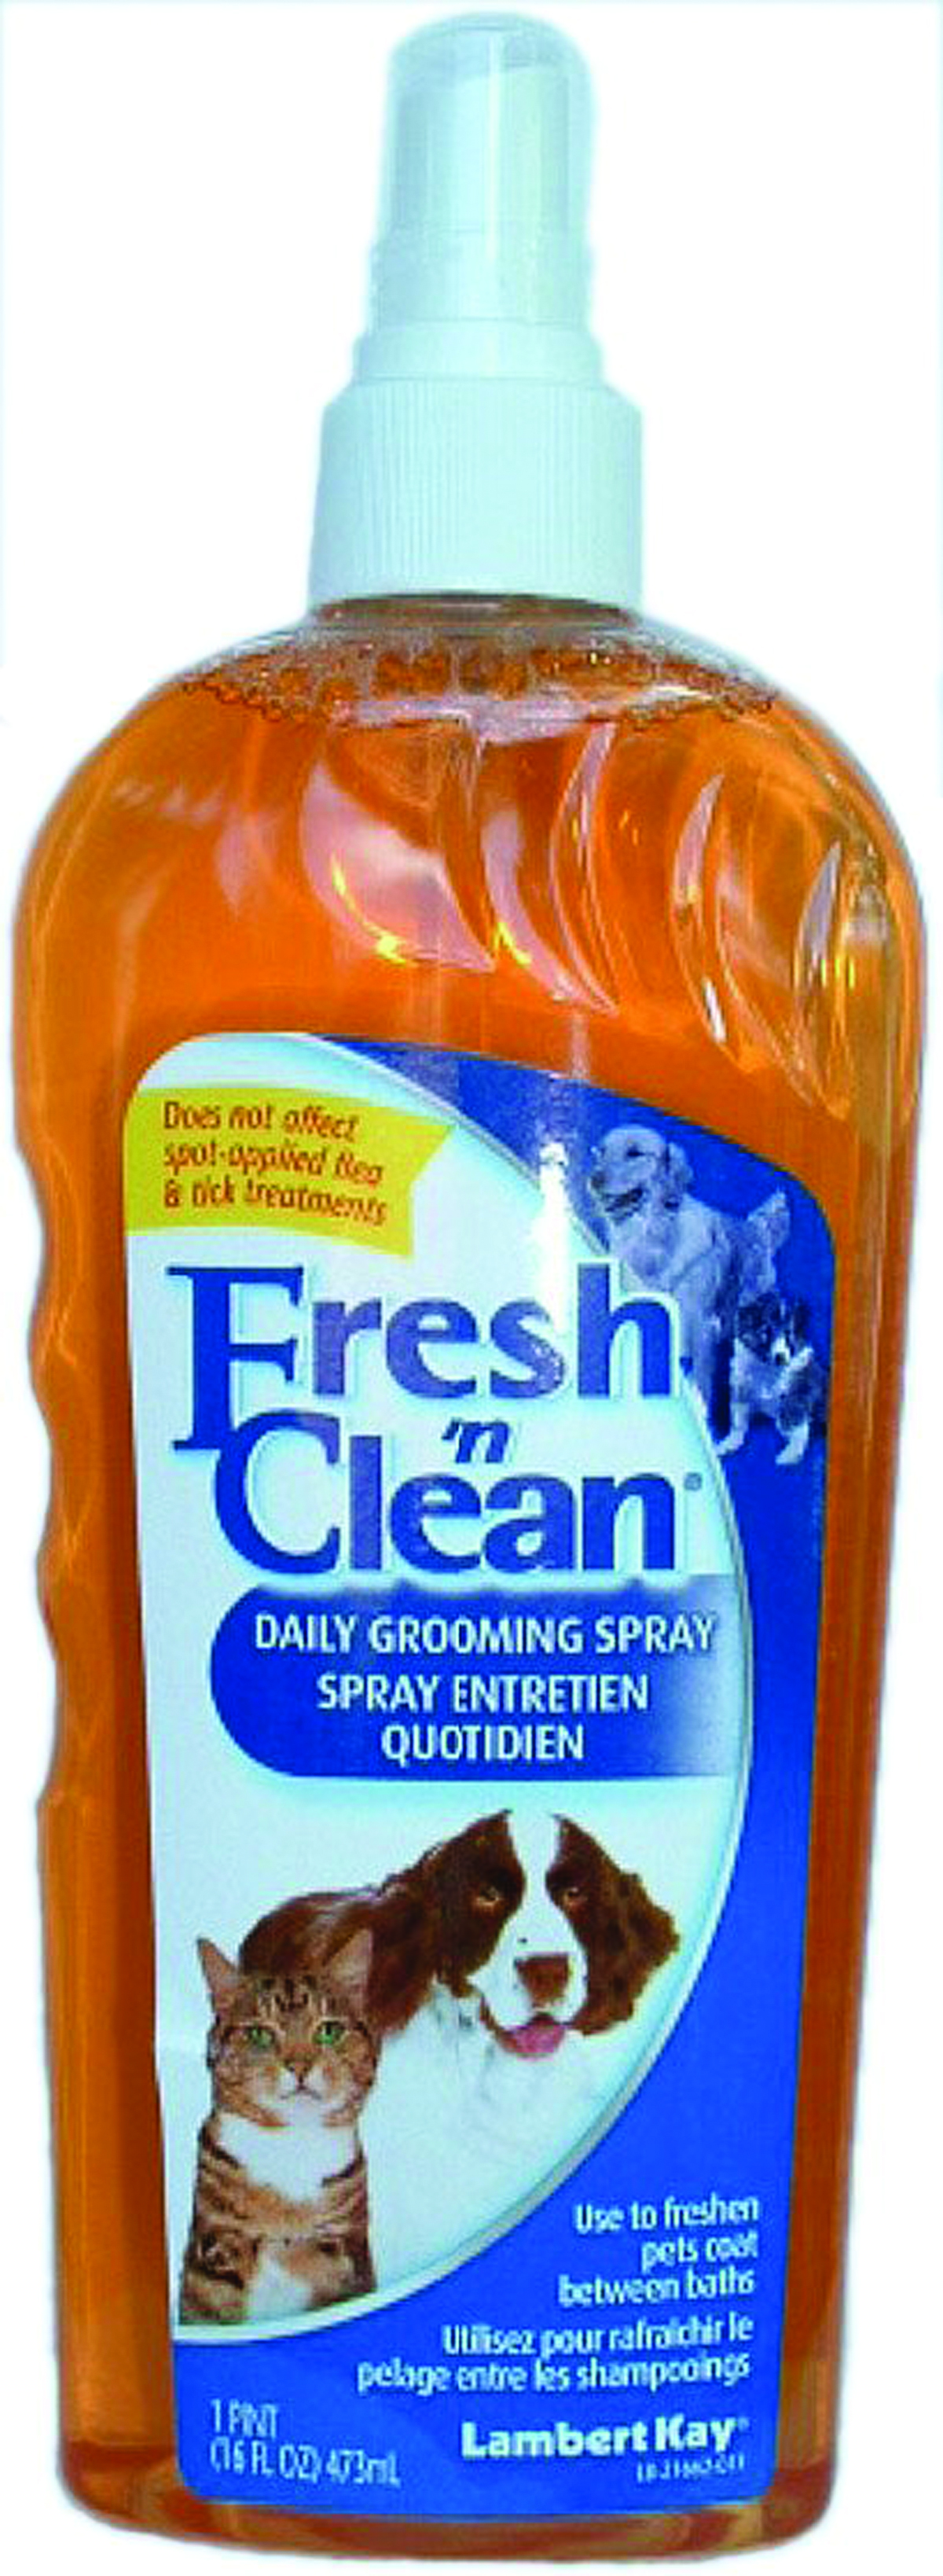 Soap free fresh n clean daily grooming spray - 16 oz